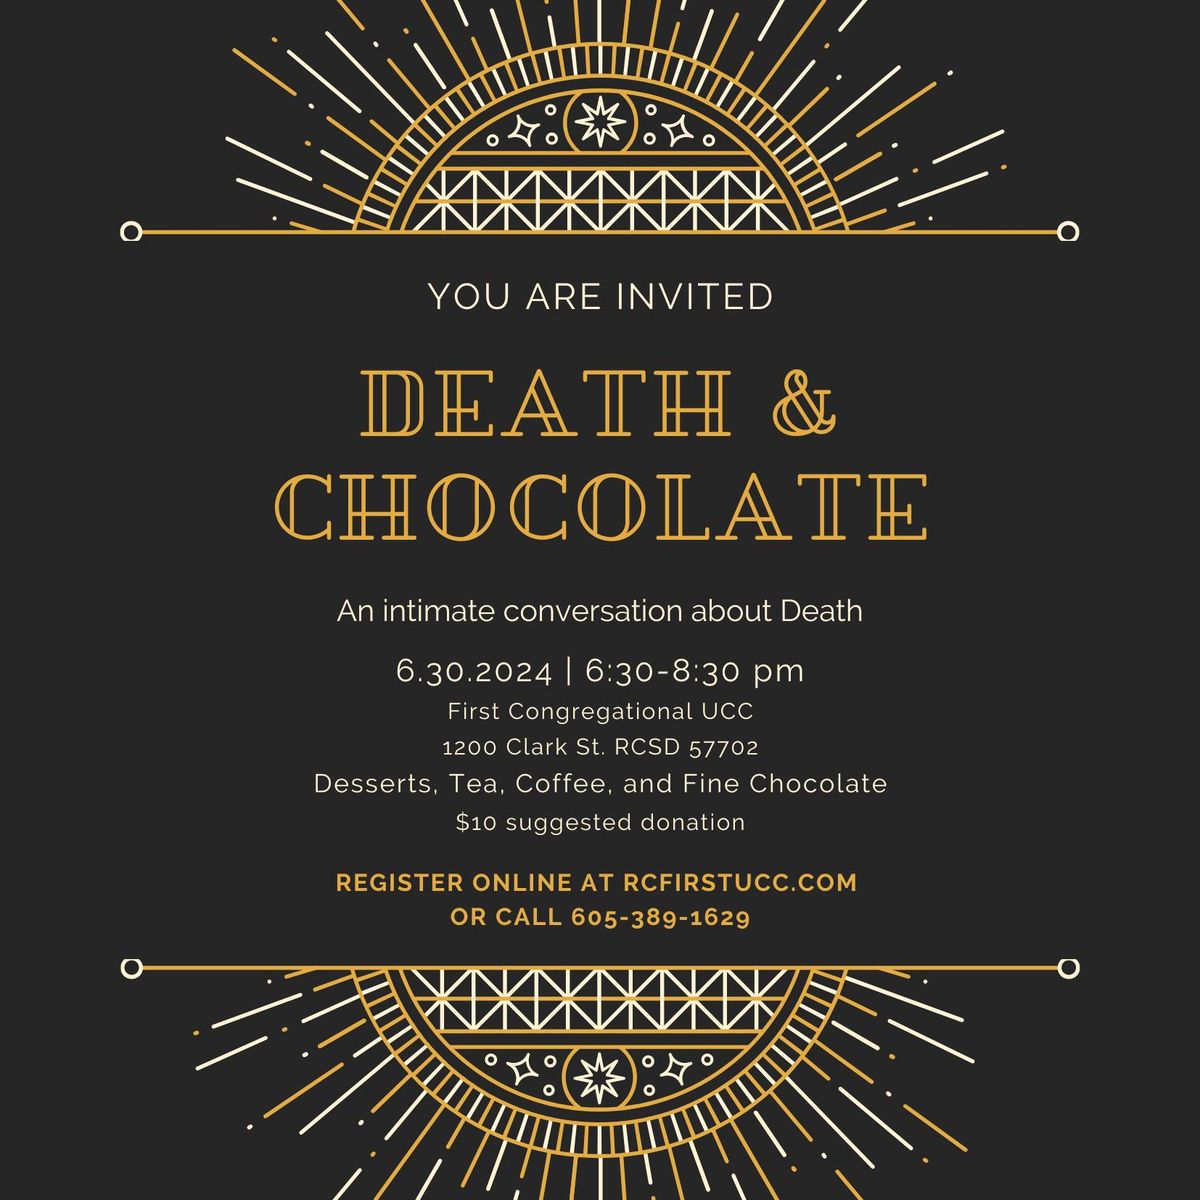 Death & Chocolate